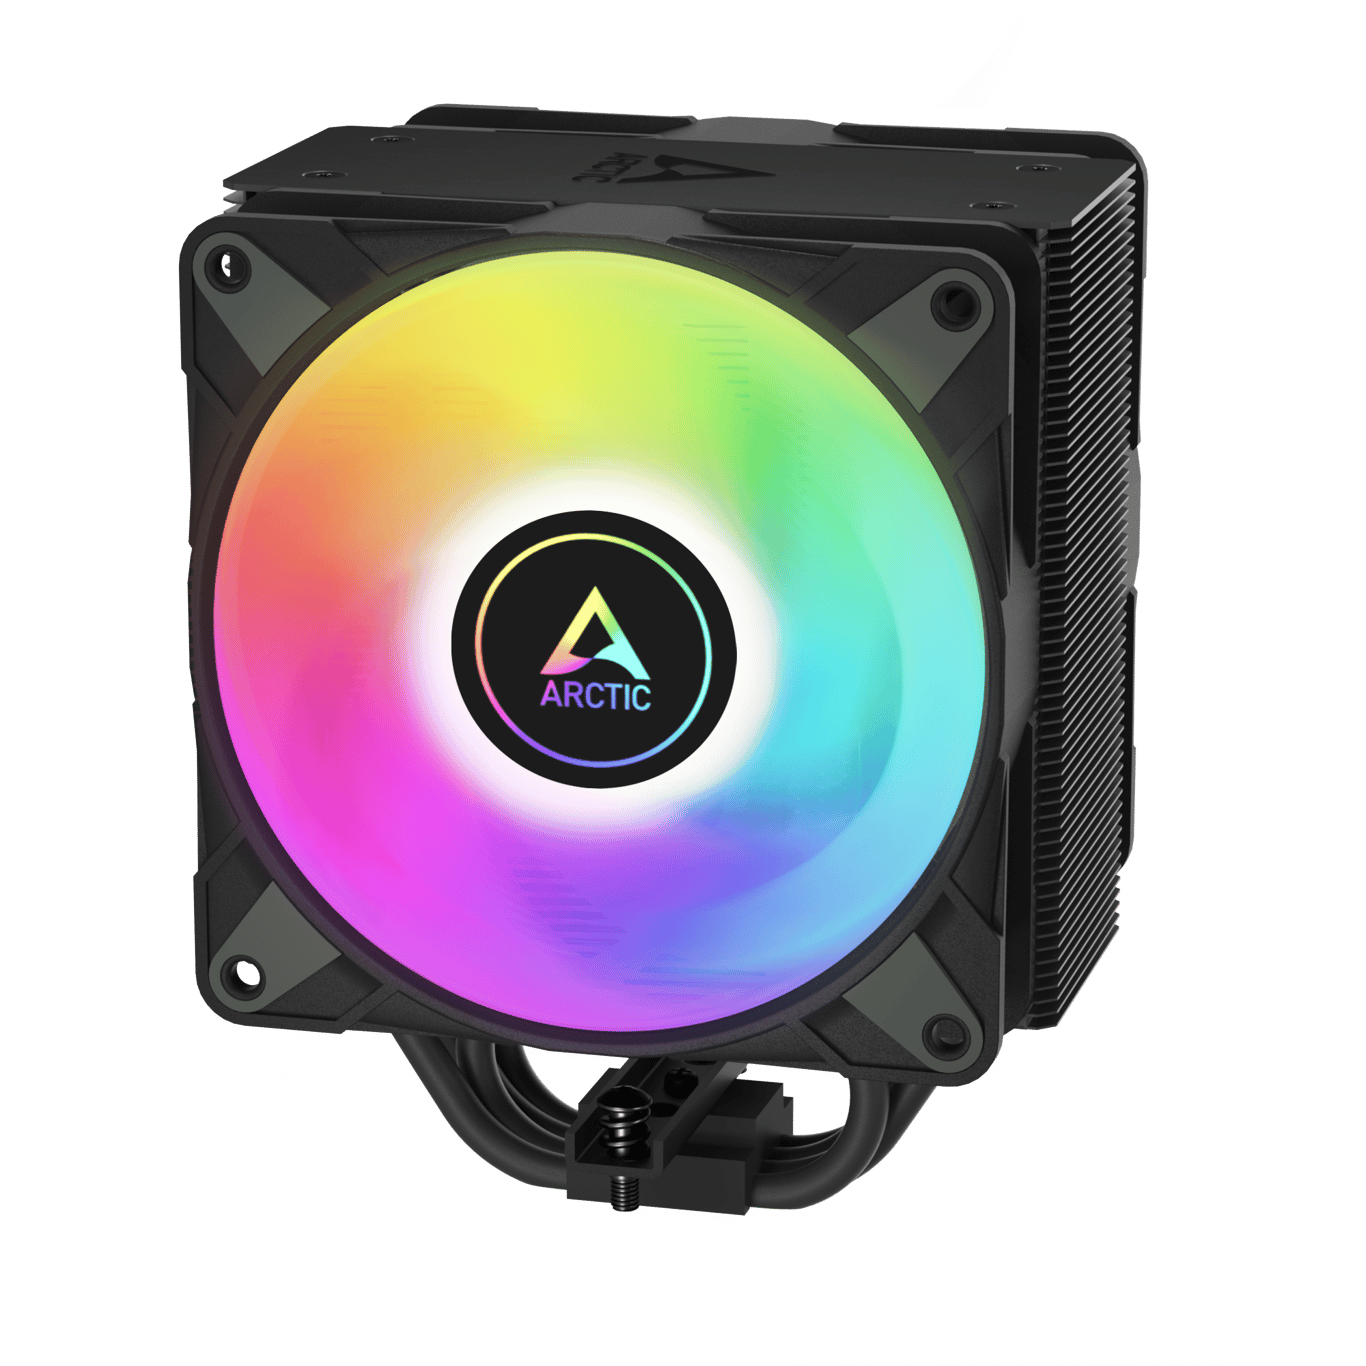 ARCTIC Freezer 36 A-RGB 風冷散熱器 - Black 黑色